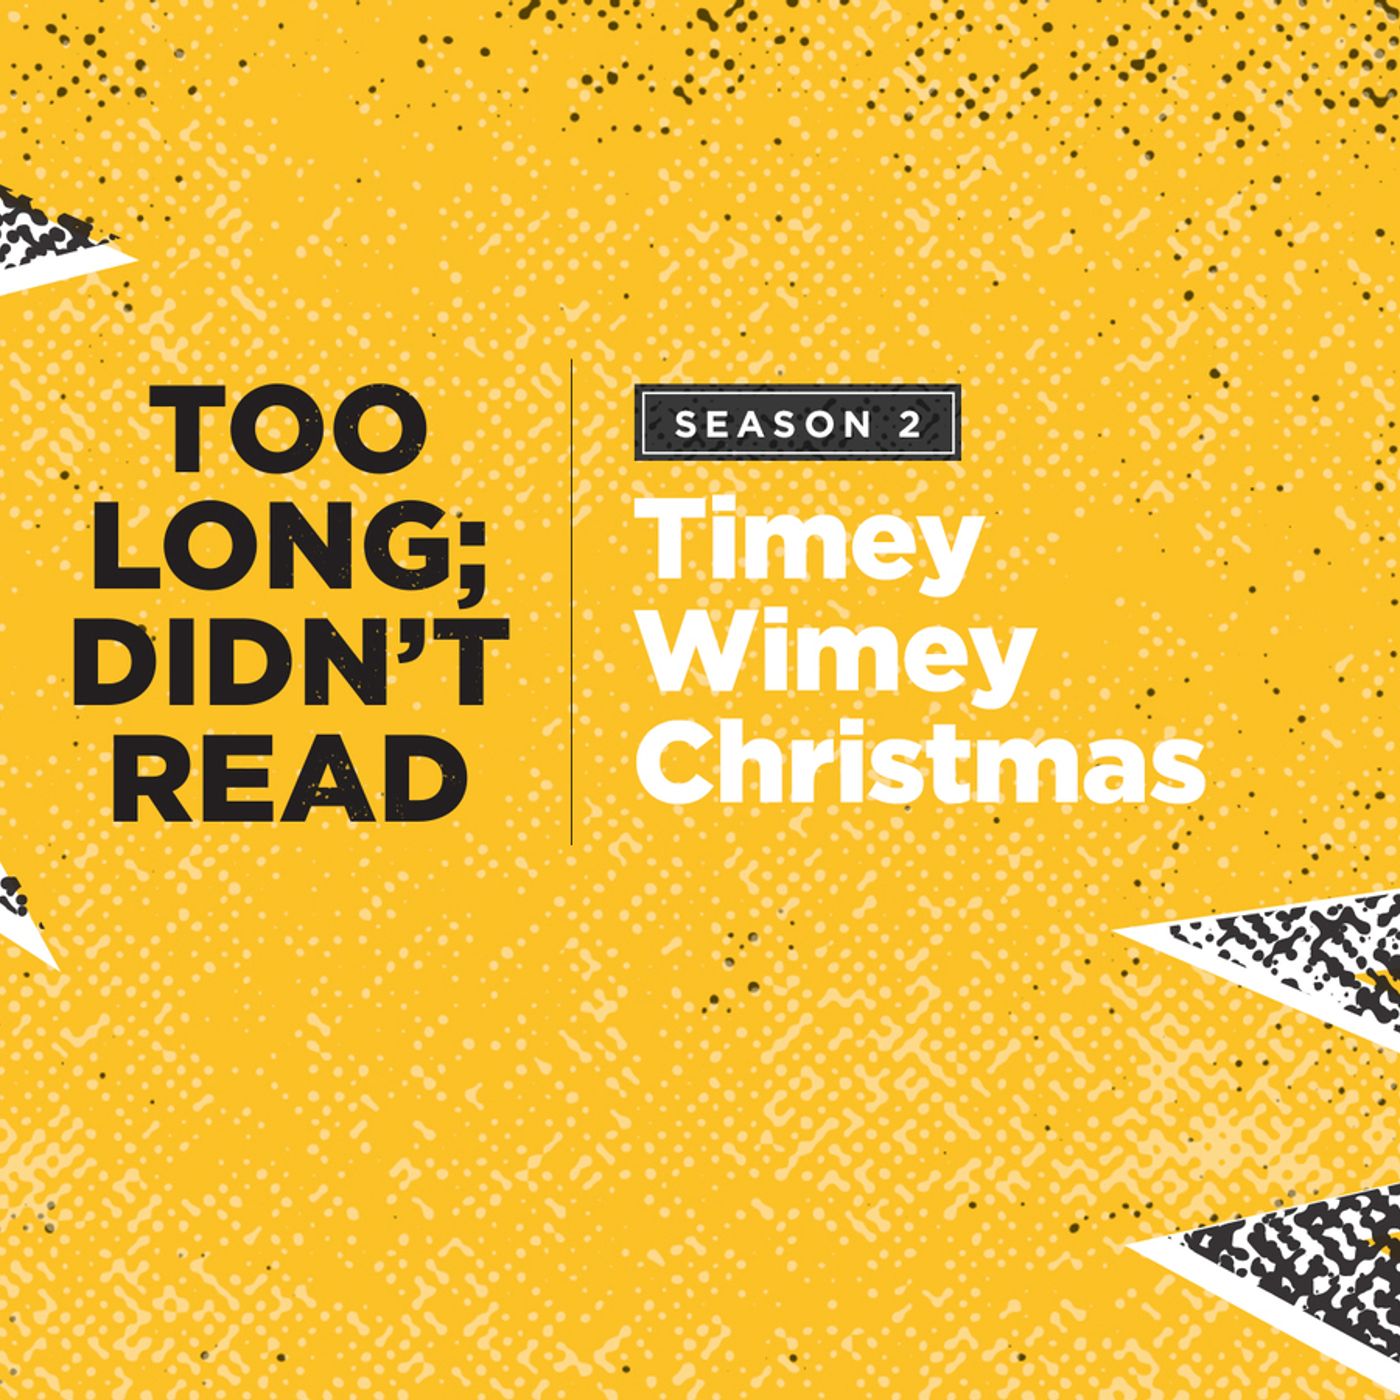 S2 Ep7: Timey Wimey Christmas